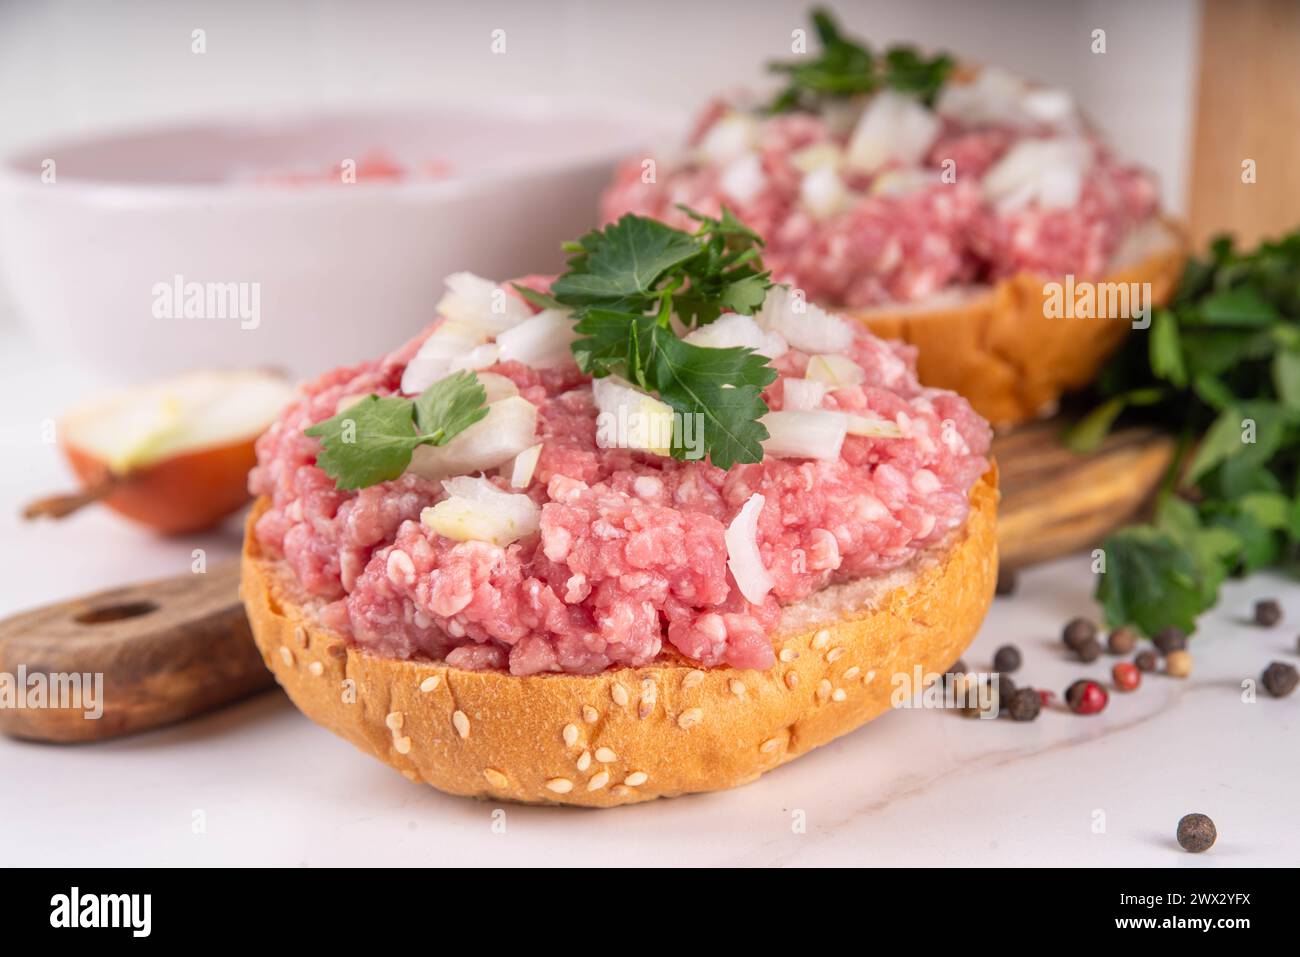 Mett brotchen, Brotzeit,  German traditional raw burger sandwich with minced pork, spices, onions, herbs Stock Photo